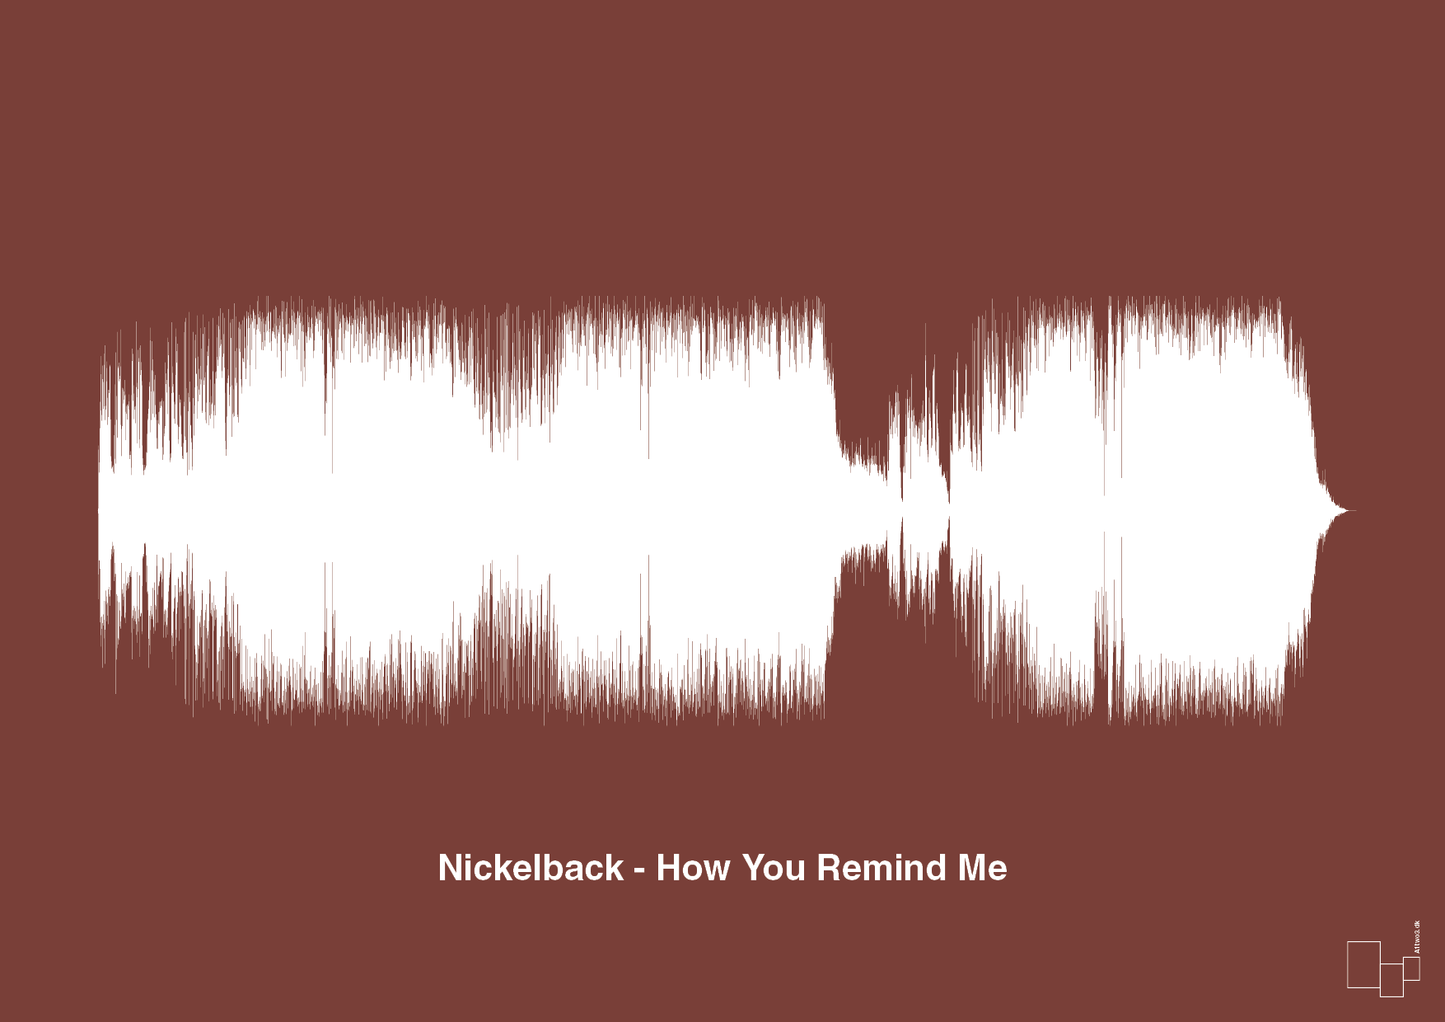 nickelback - how you remind me - Plakat med Musik i Red Pepper